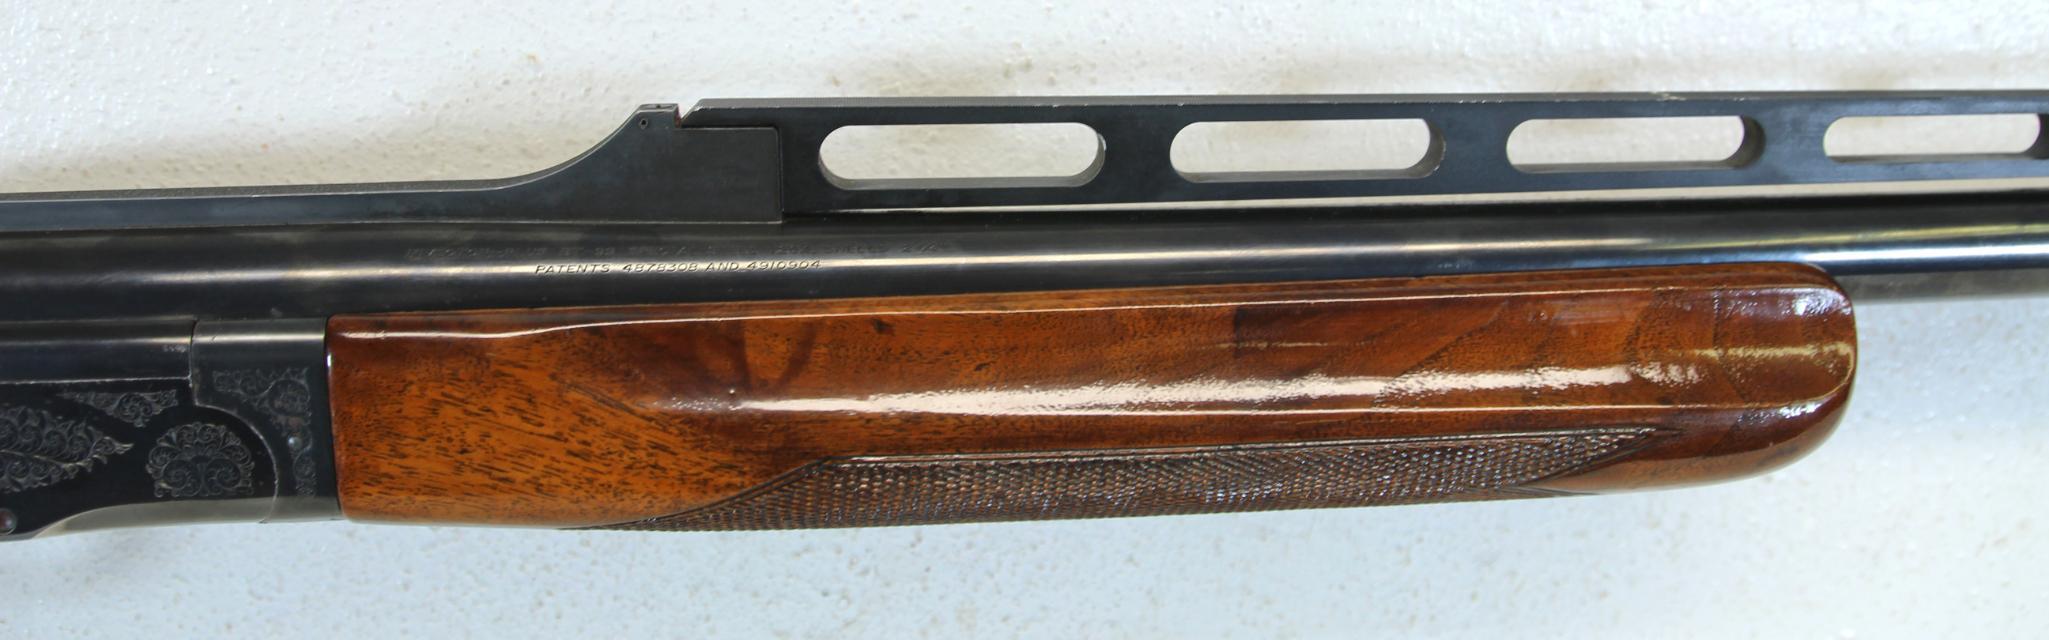 Browning BT-99 Plus 12 Ga. Single Barrel Single Shot Trap Shotgun Fully Adjustable Stock and Comb...